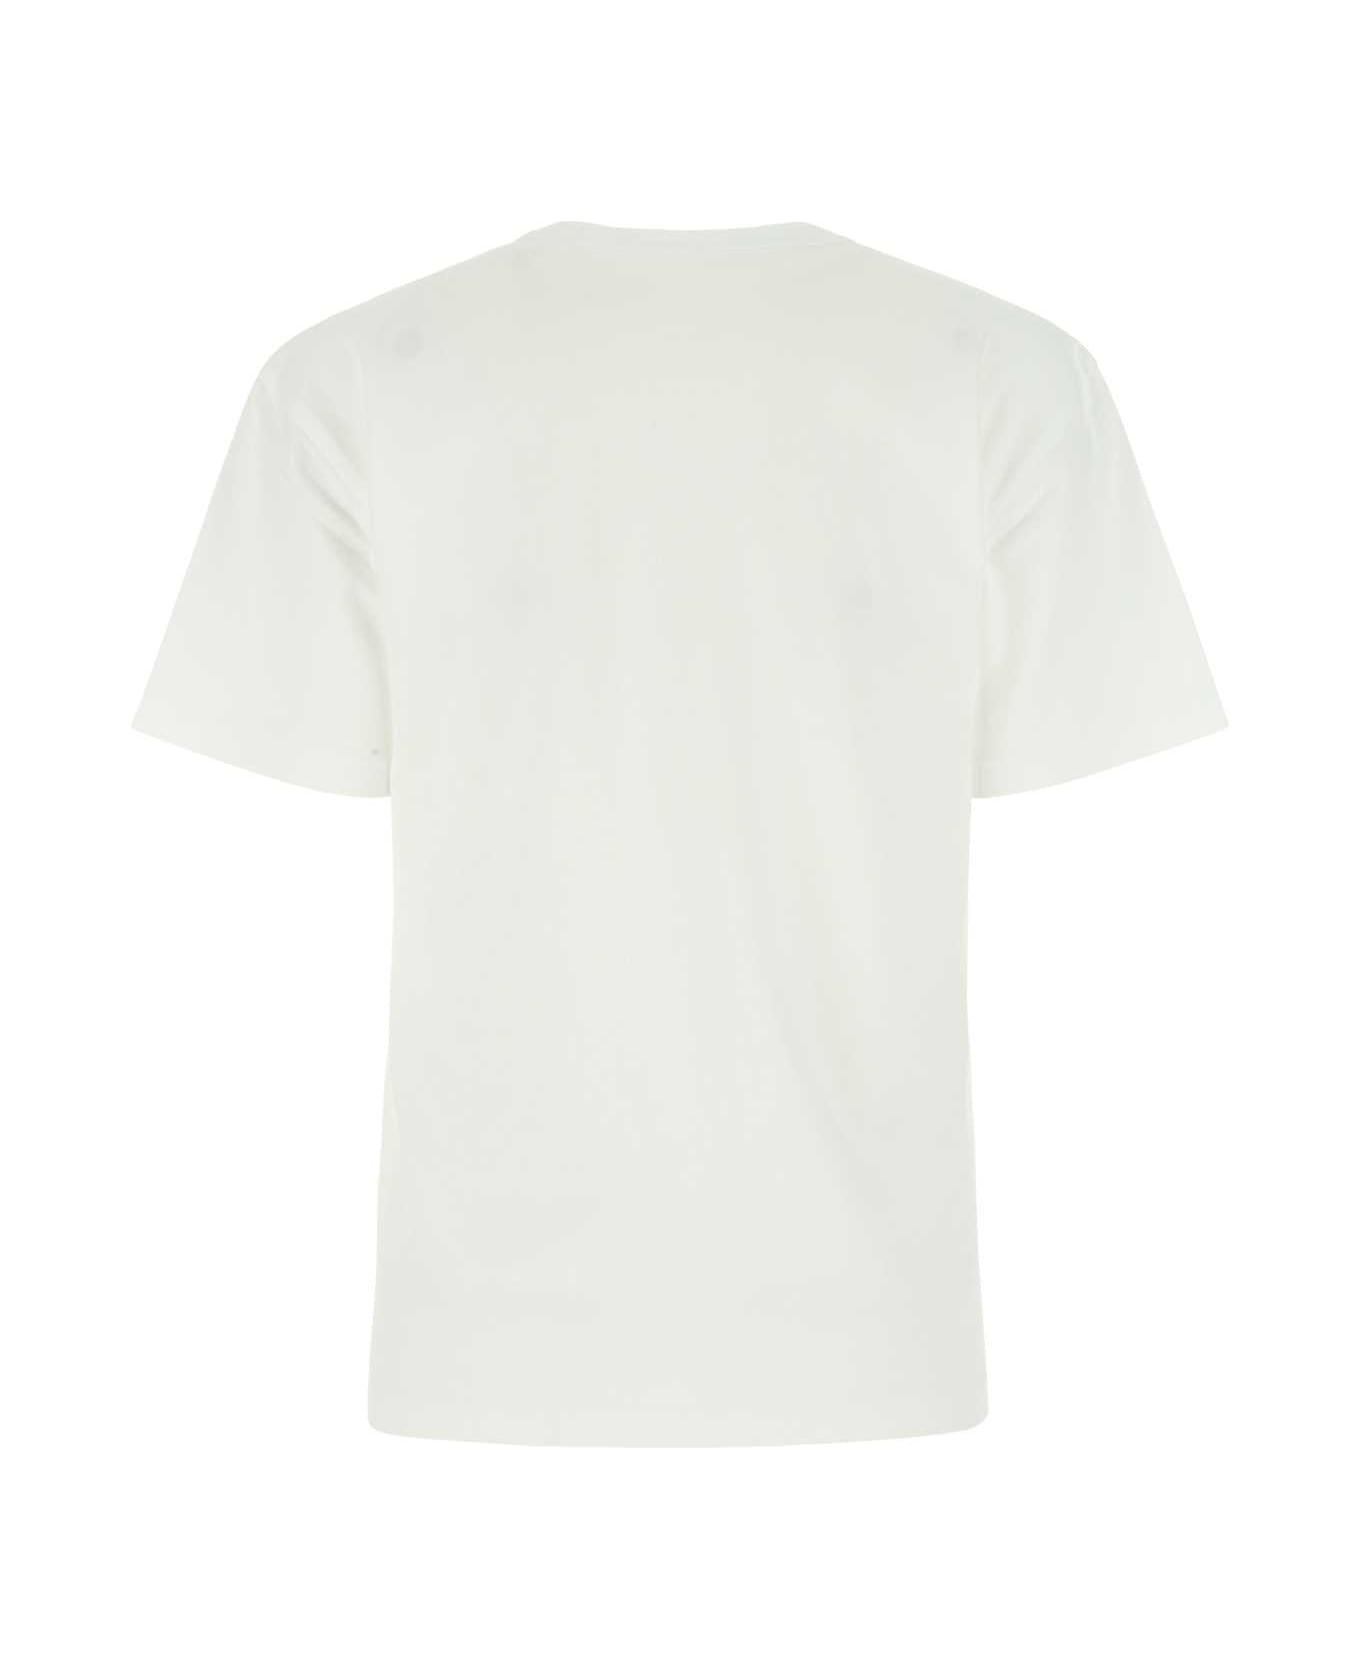 T by Alexander Wang White Cotton Oversize T-shirt - 100